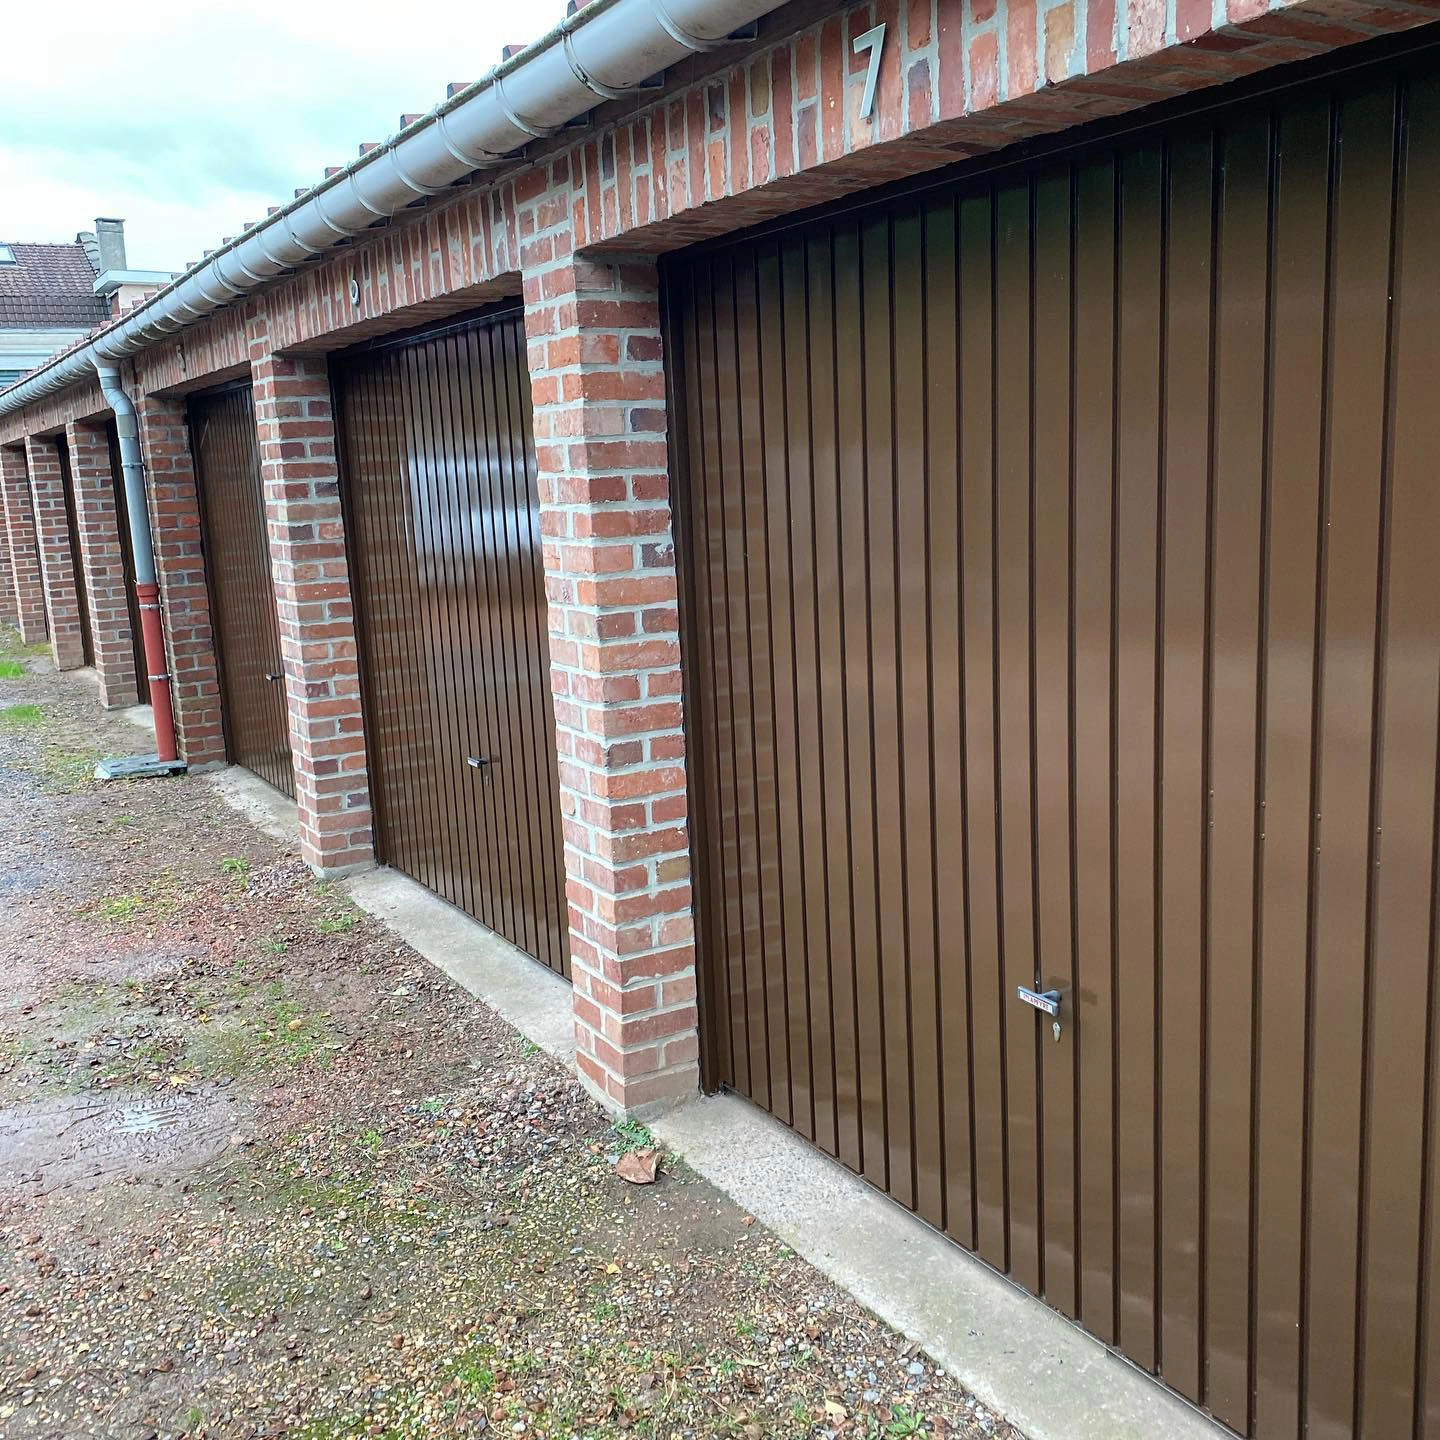 Sepia brown RAL 8014 garage doors